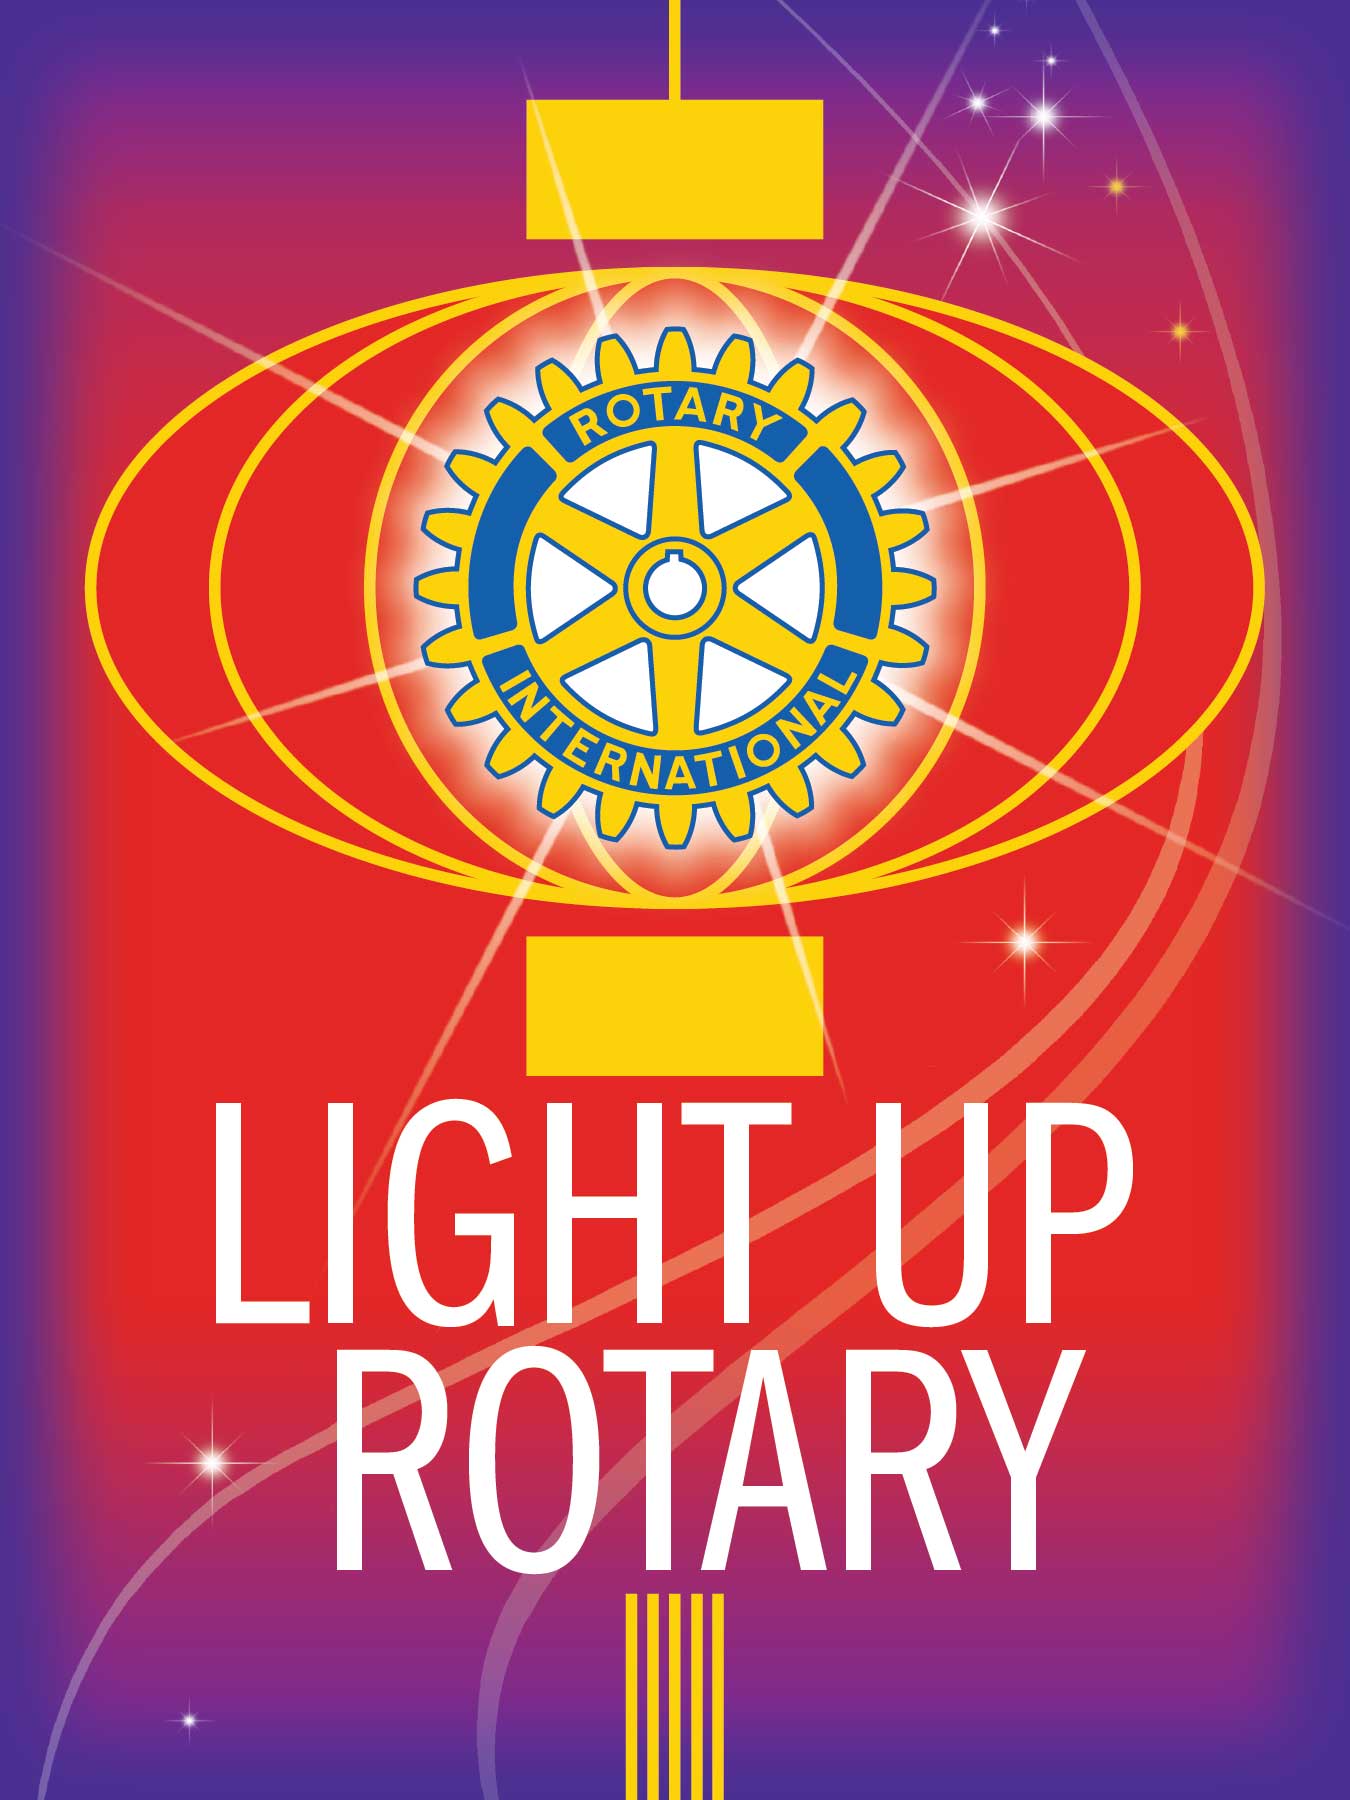 Rotary 2014-15 Theme: Light Up Rotary